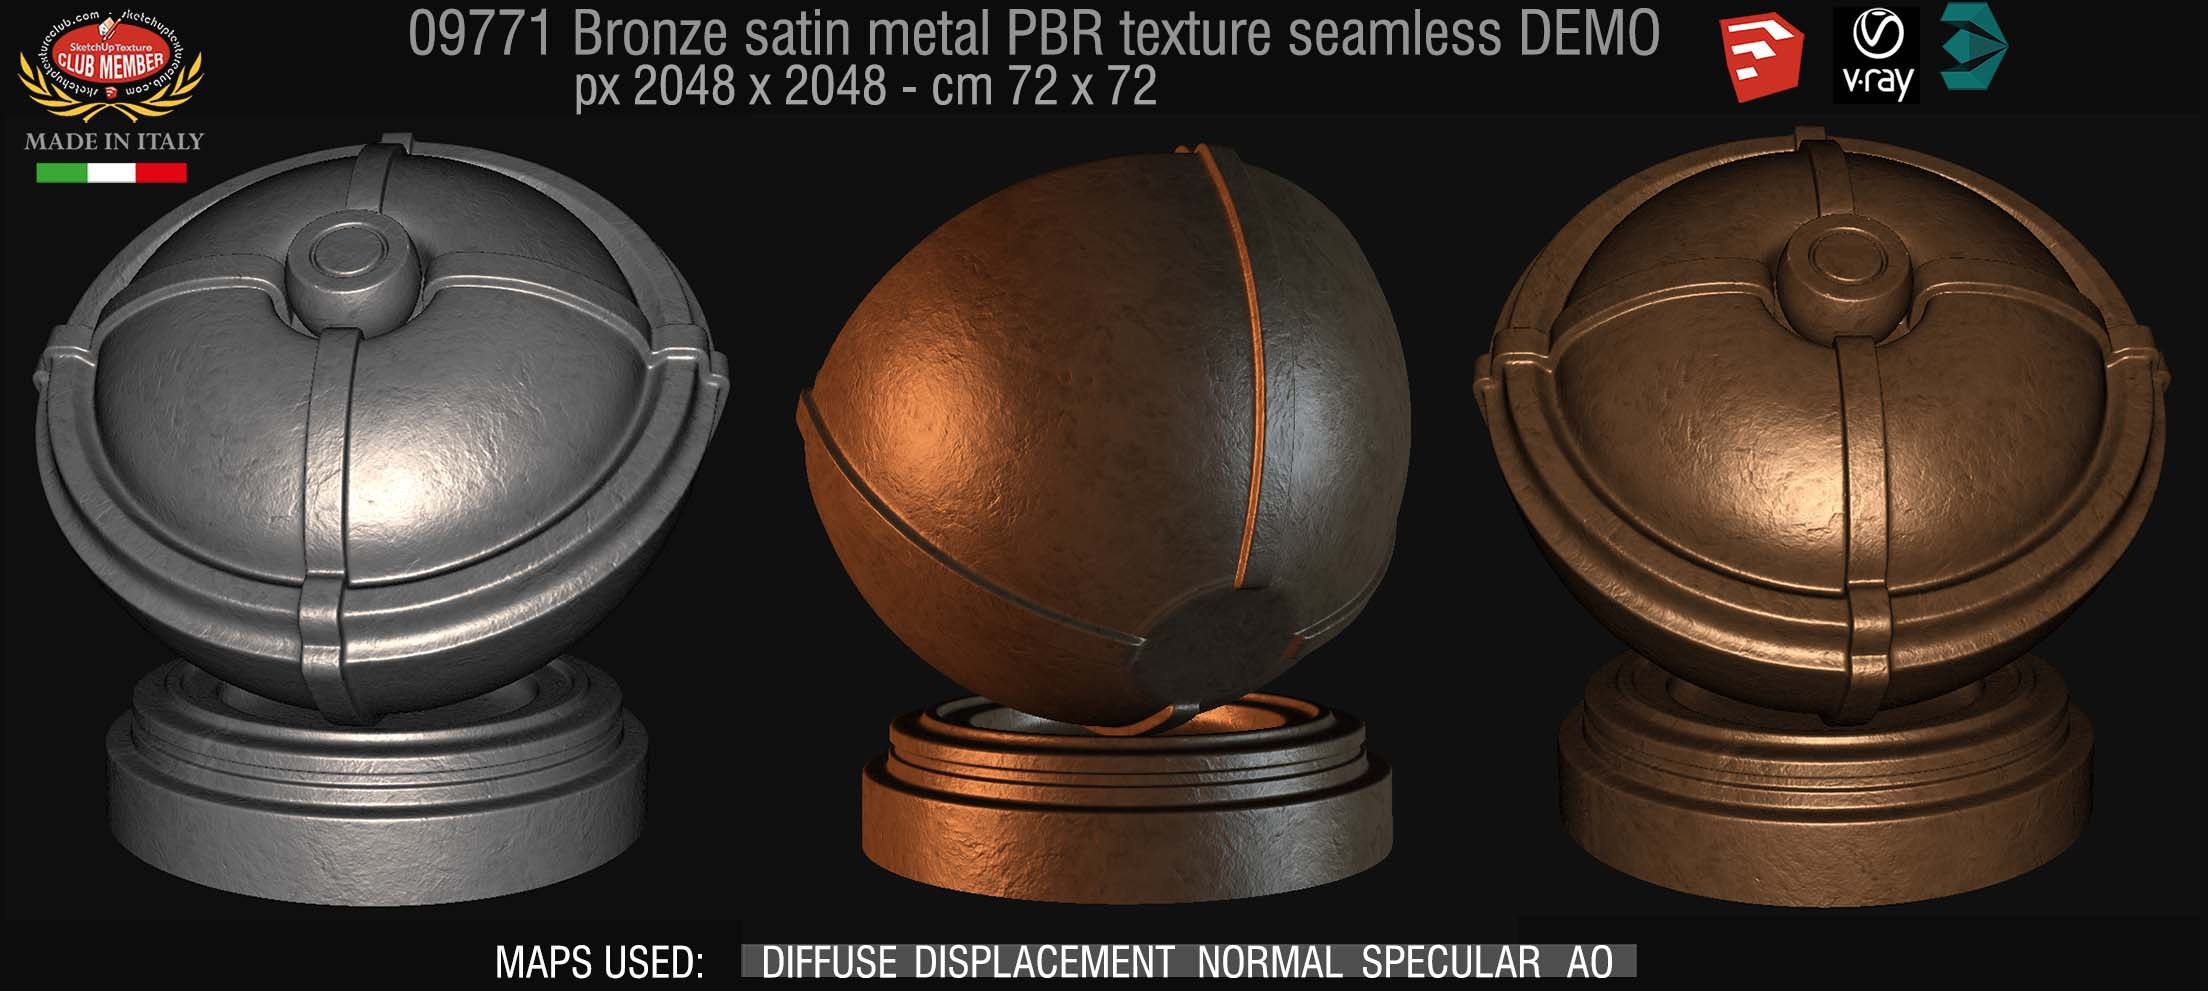 09771 Bronze satin metal PBR texture seamless DEMO